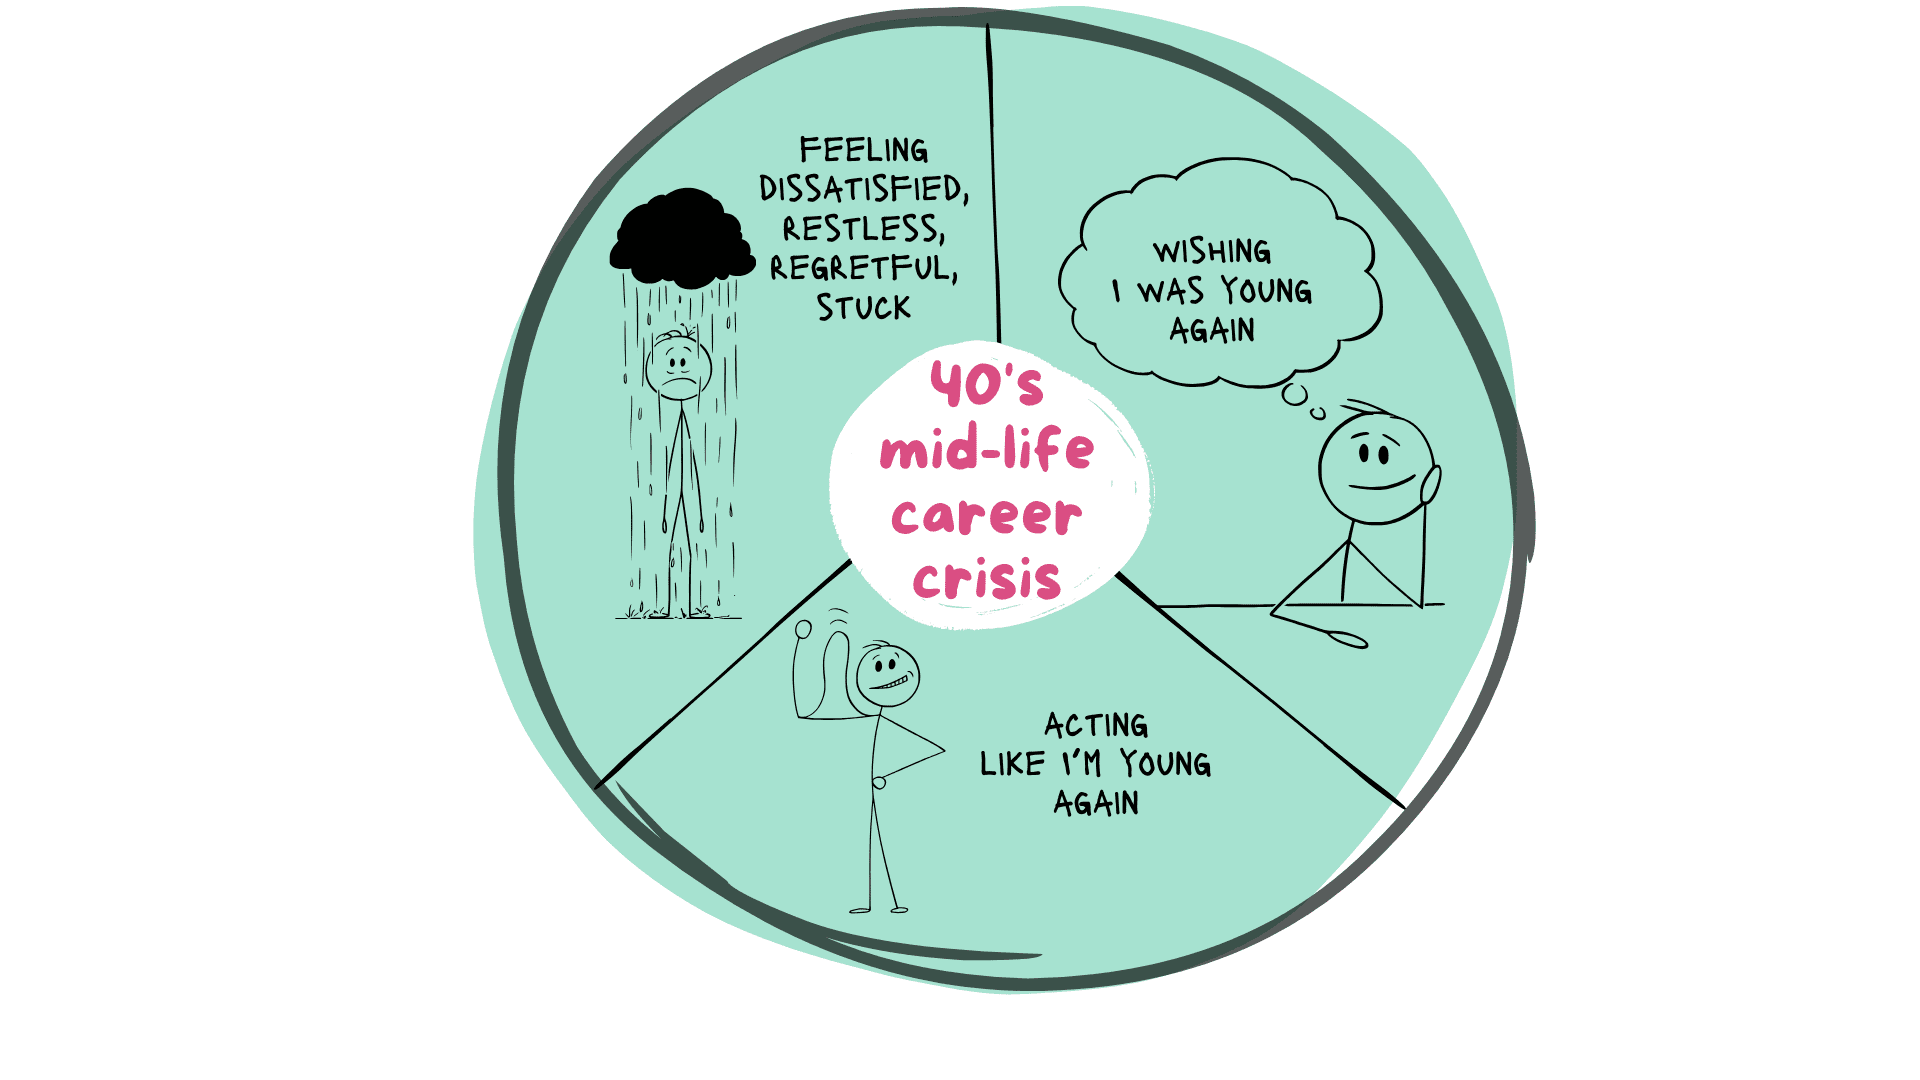 40's mid-life career crisis